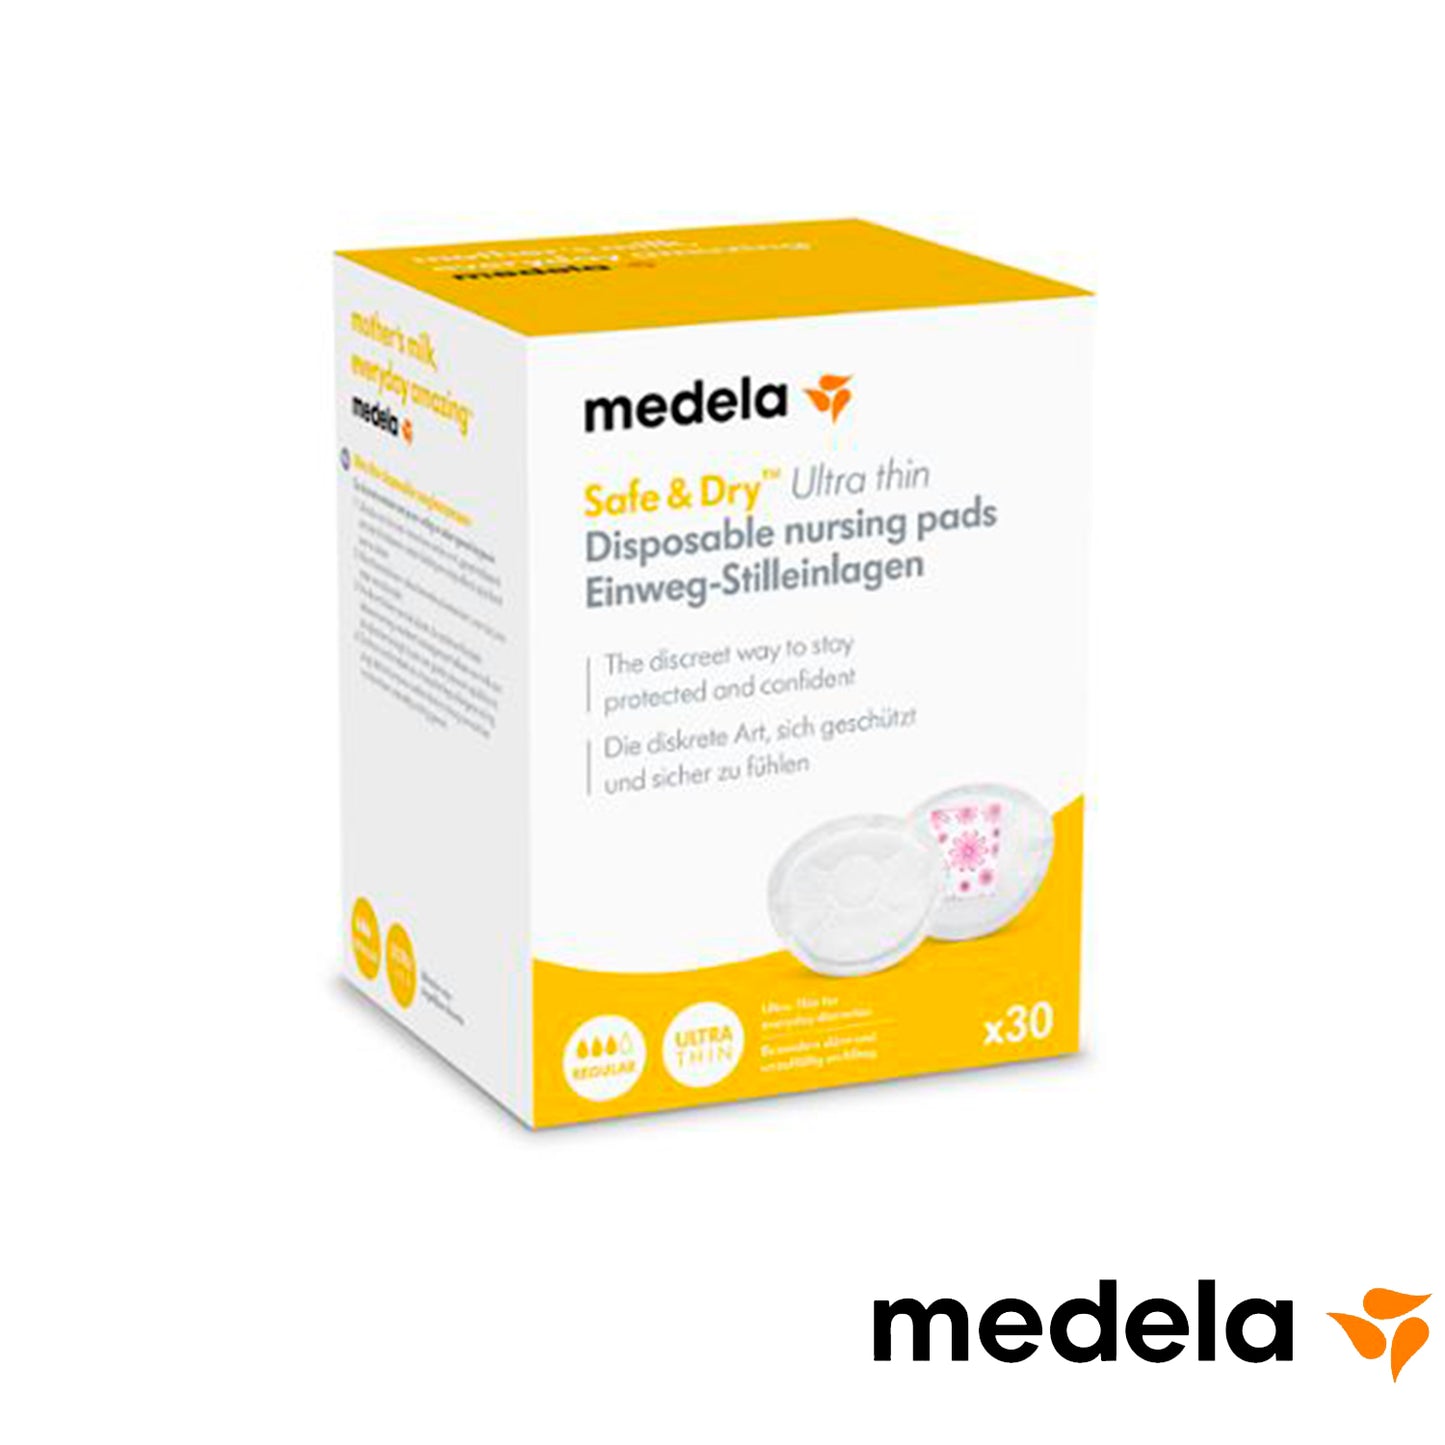 Medela - Safe & Dry Ultra thin Disposable Nursing Pads – Iperbimbo